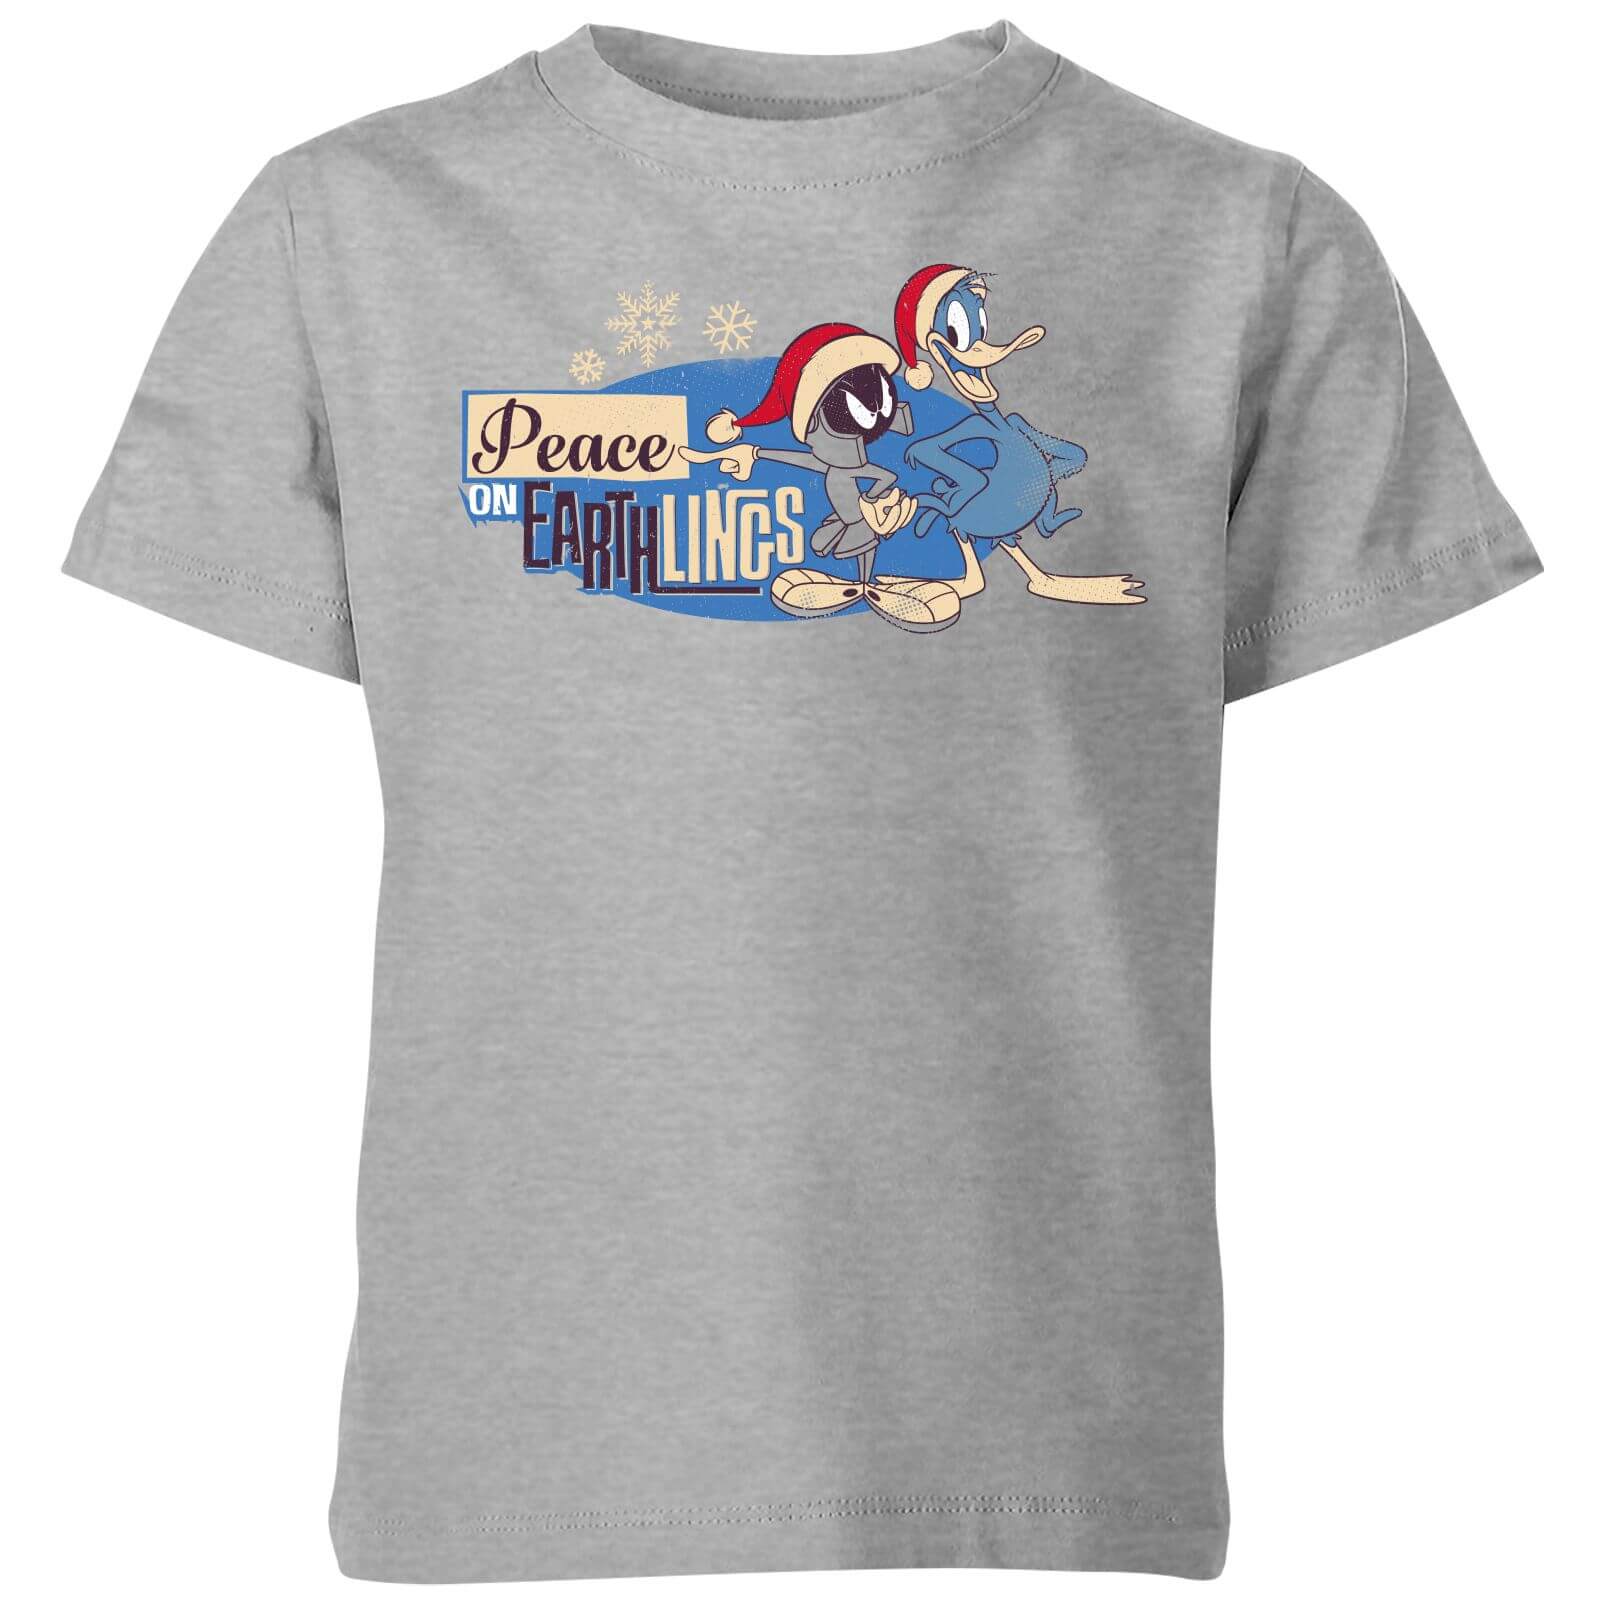 Looney Tunes Peace Among Earthlings Kids' Christmas T-Shirt - Grey - 7-8 Years - Grey